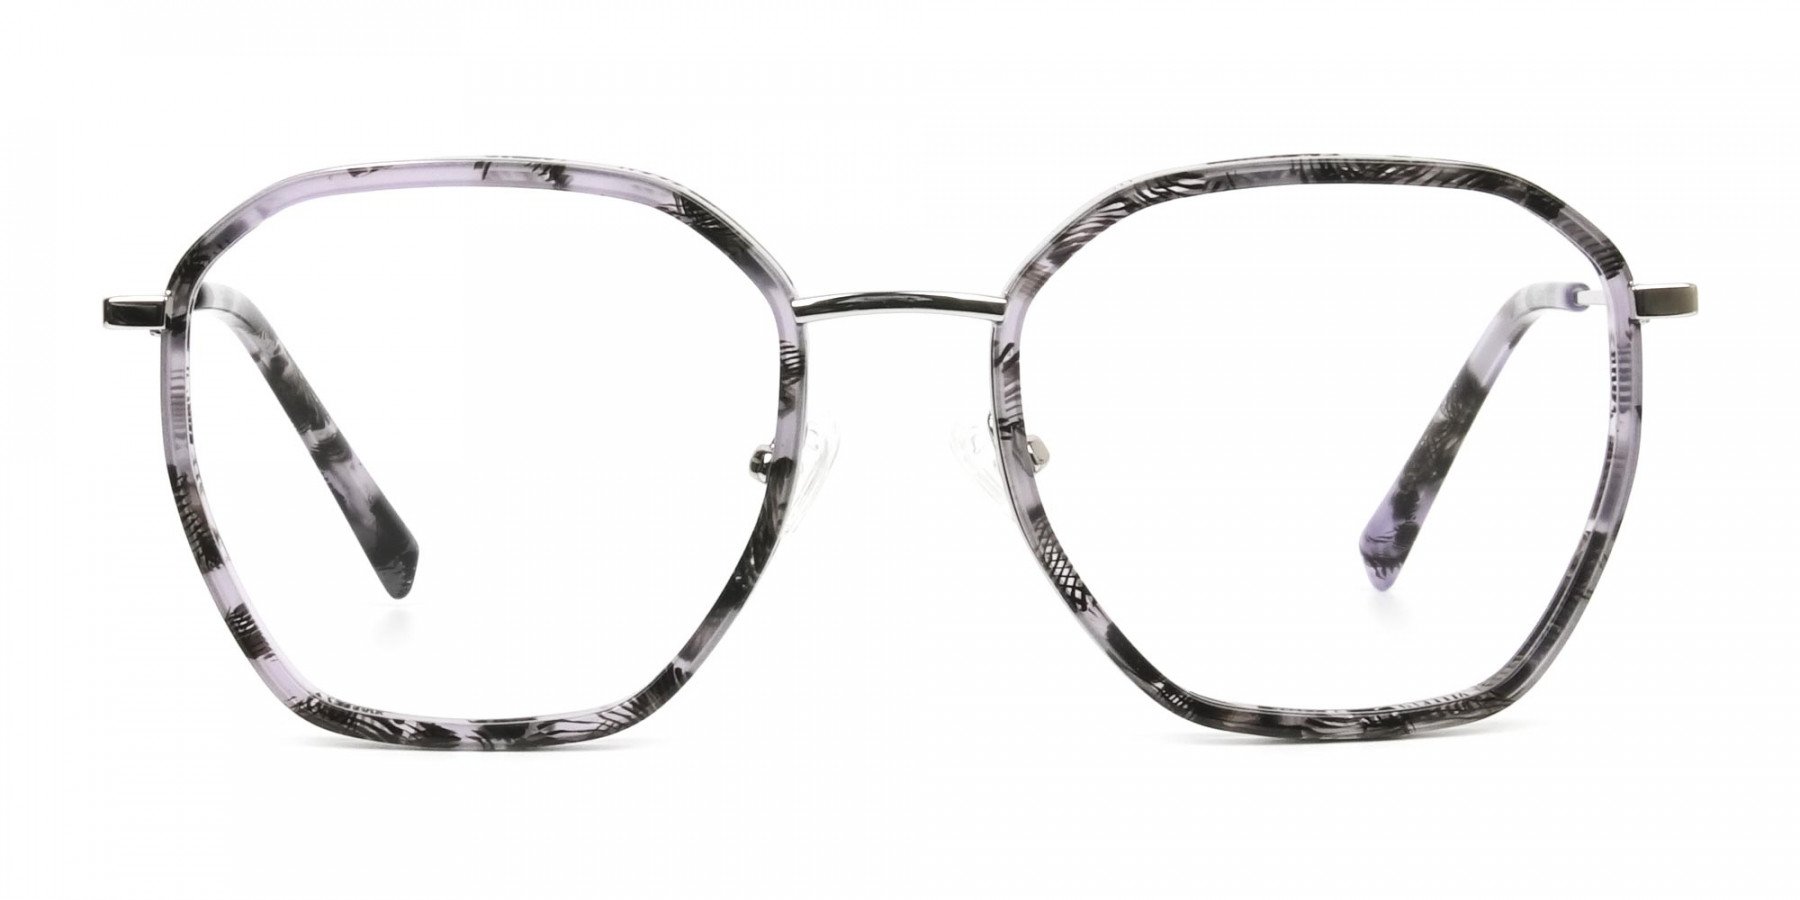 Black and White Hipster Glasses 